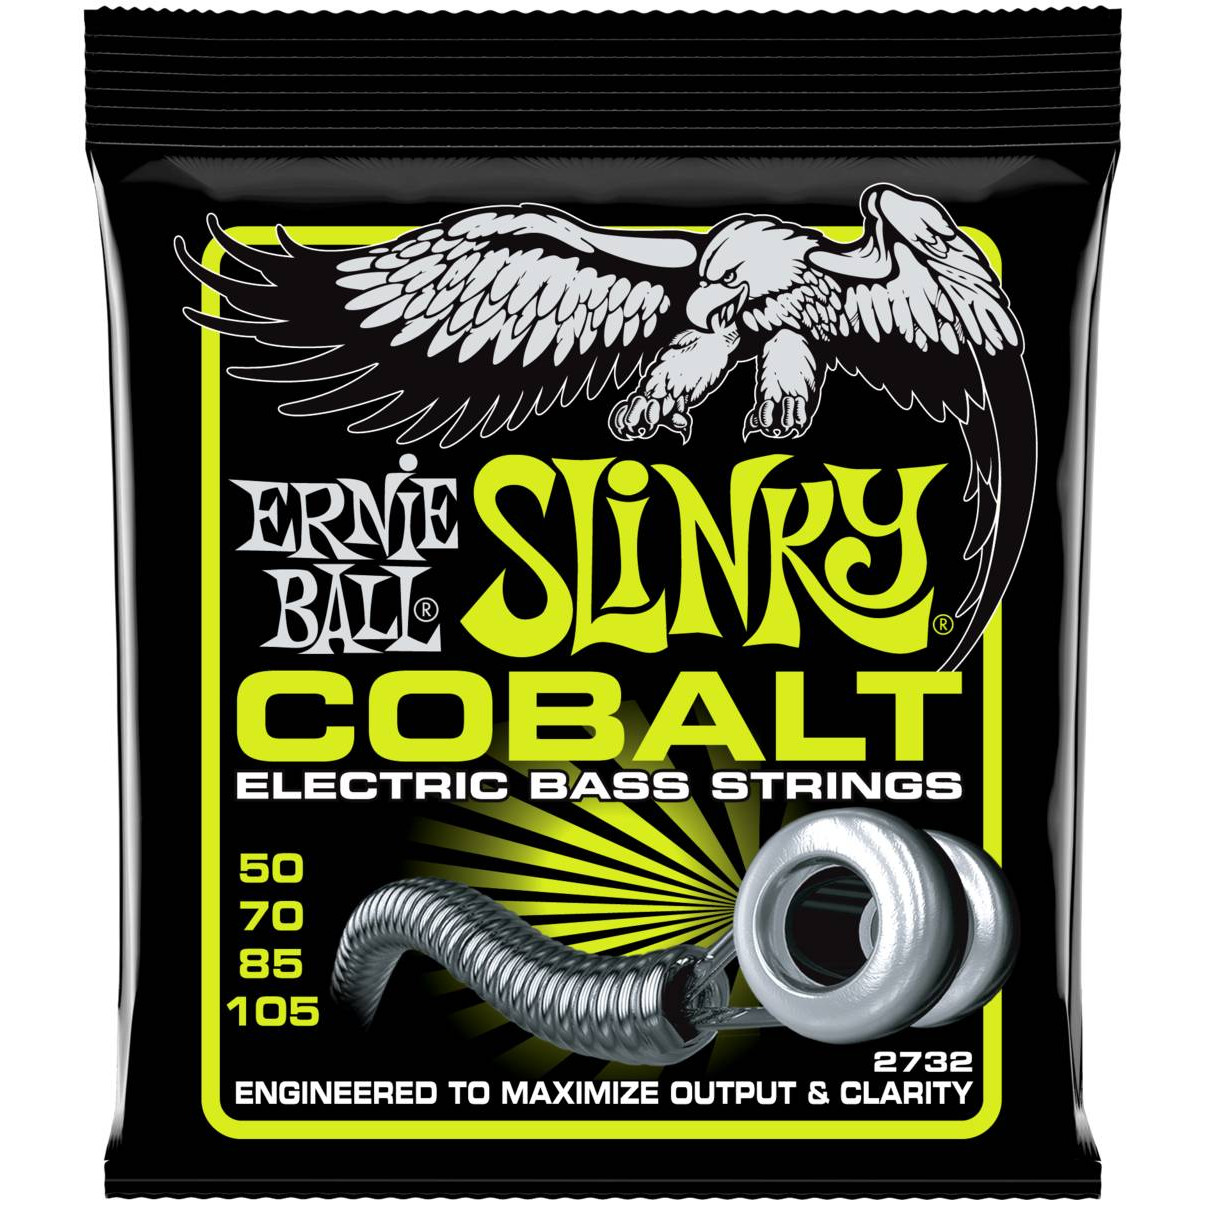 Струны Ernie Ball 2732 Slinky Cobalt Regular струны ernie ball 2736 slinky cobalt bass 5